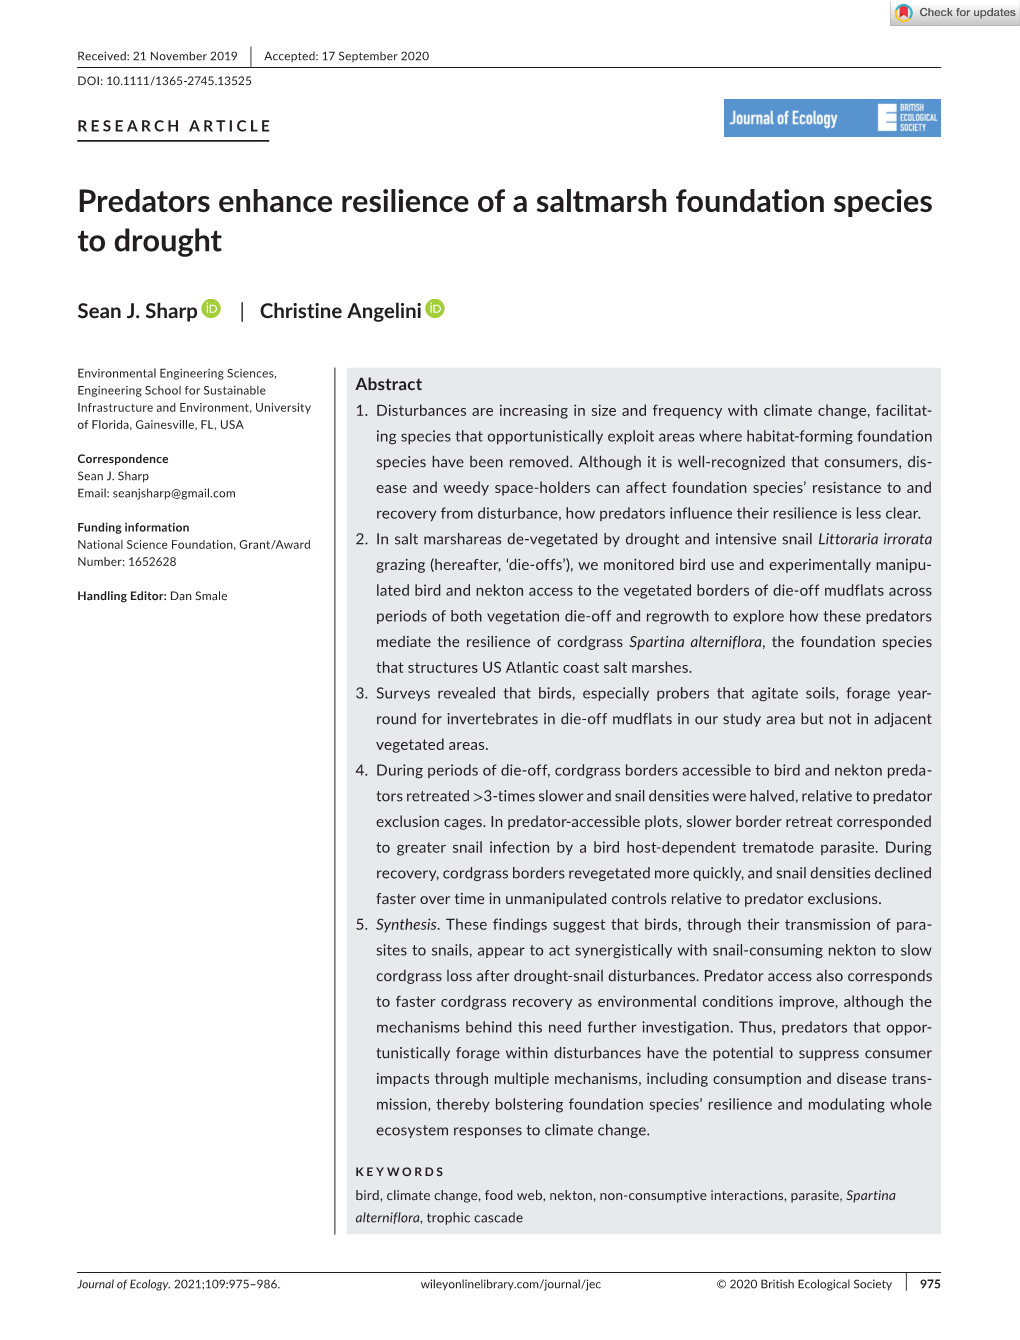 Predators Enhance Resilience of a Saltmarsh Foundation Species to Drought